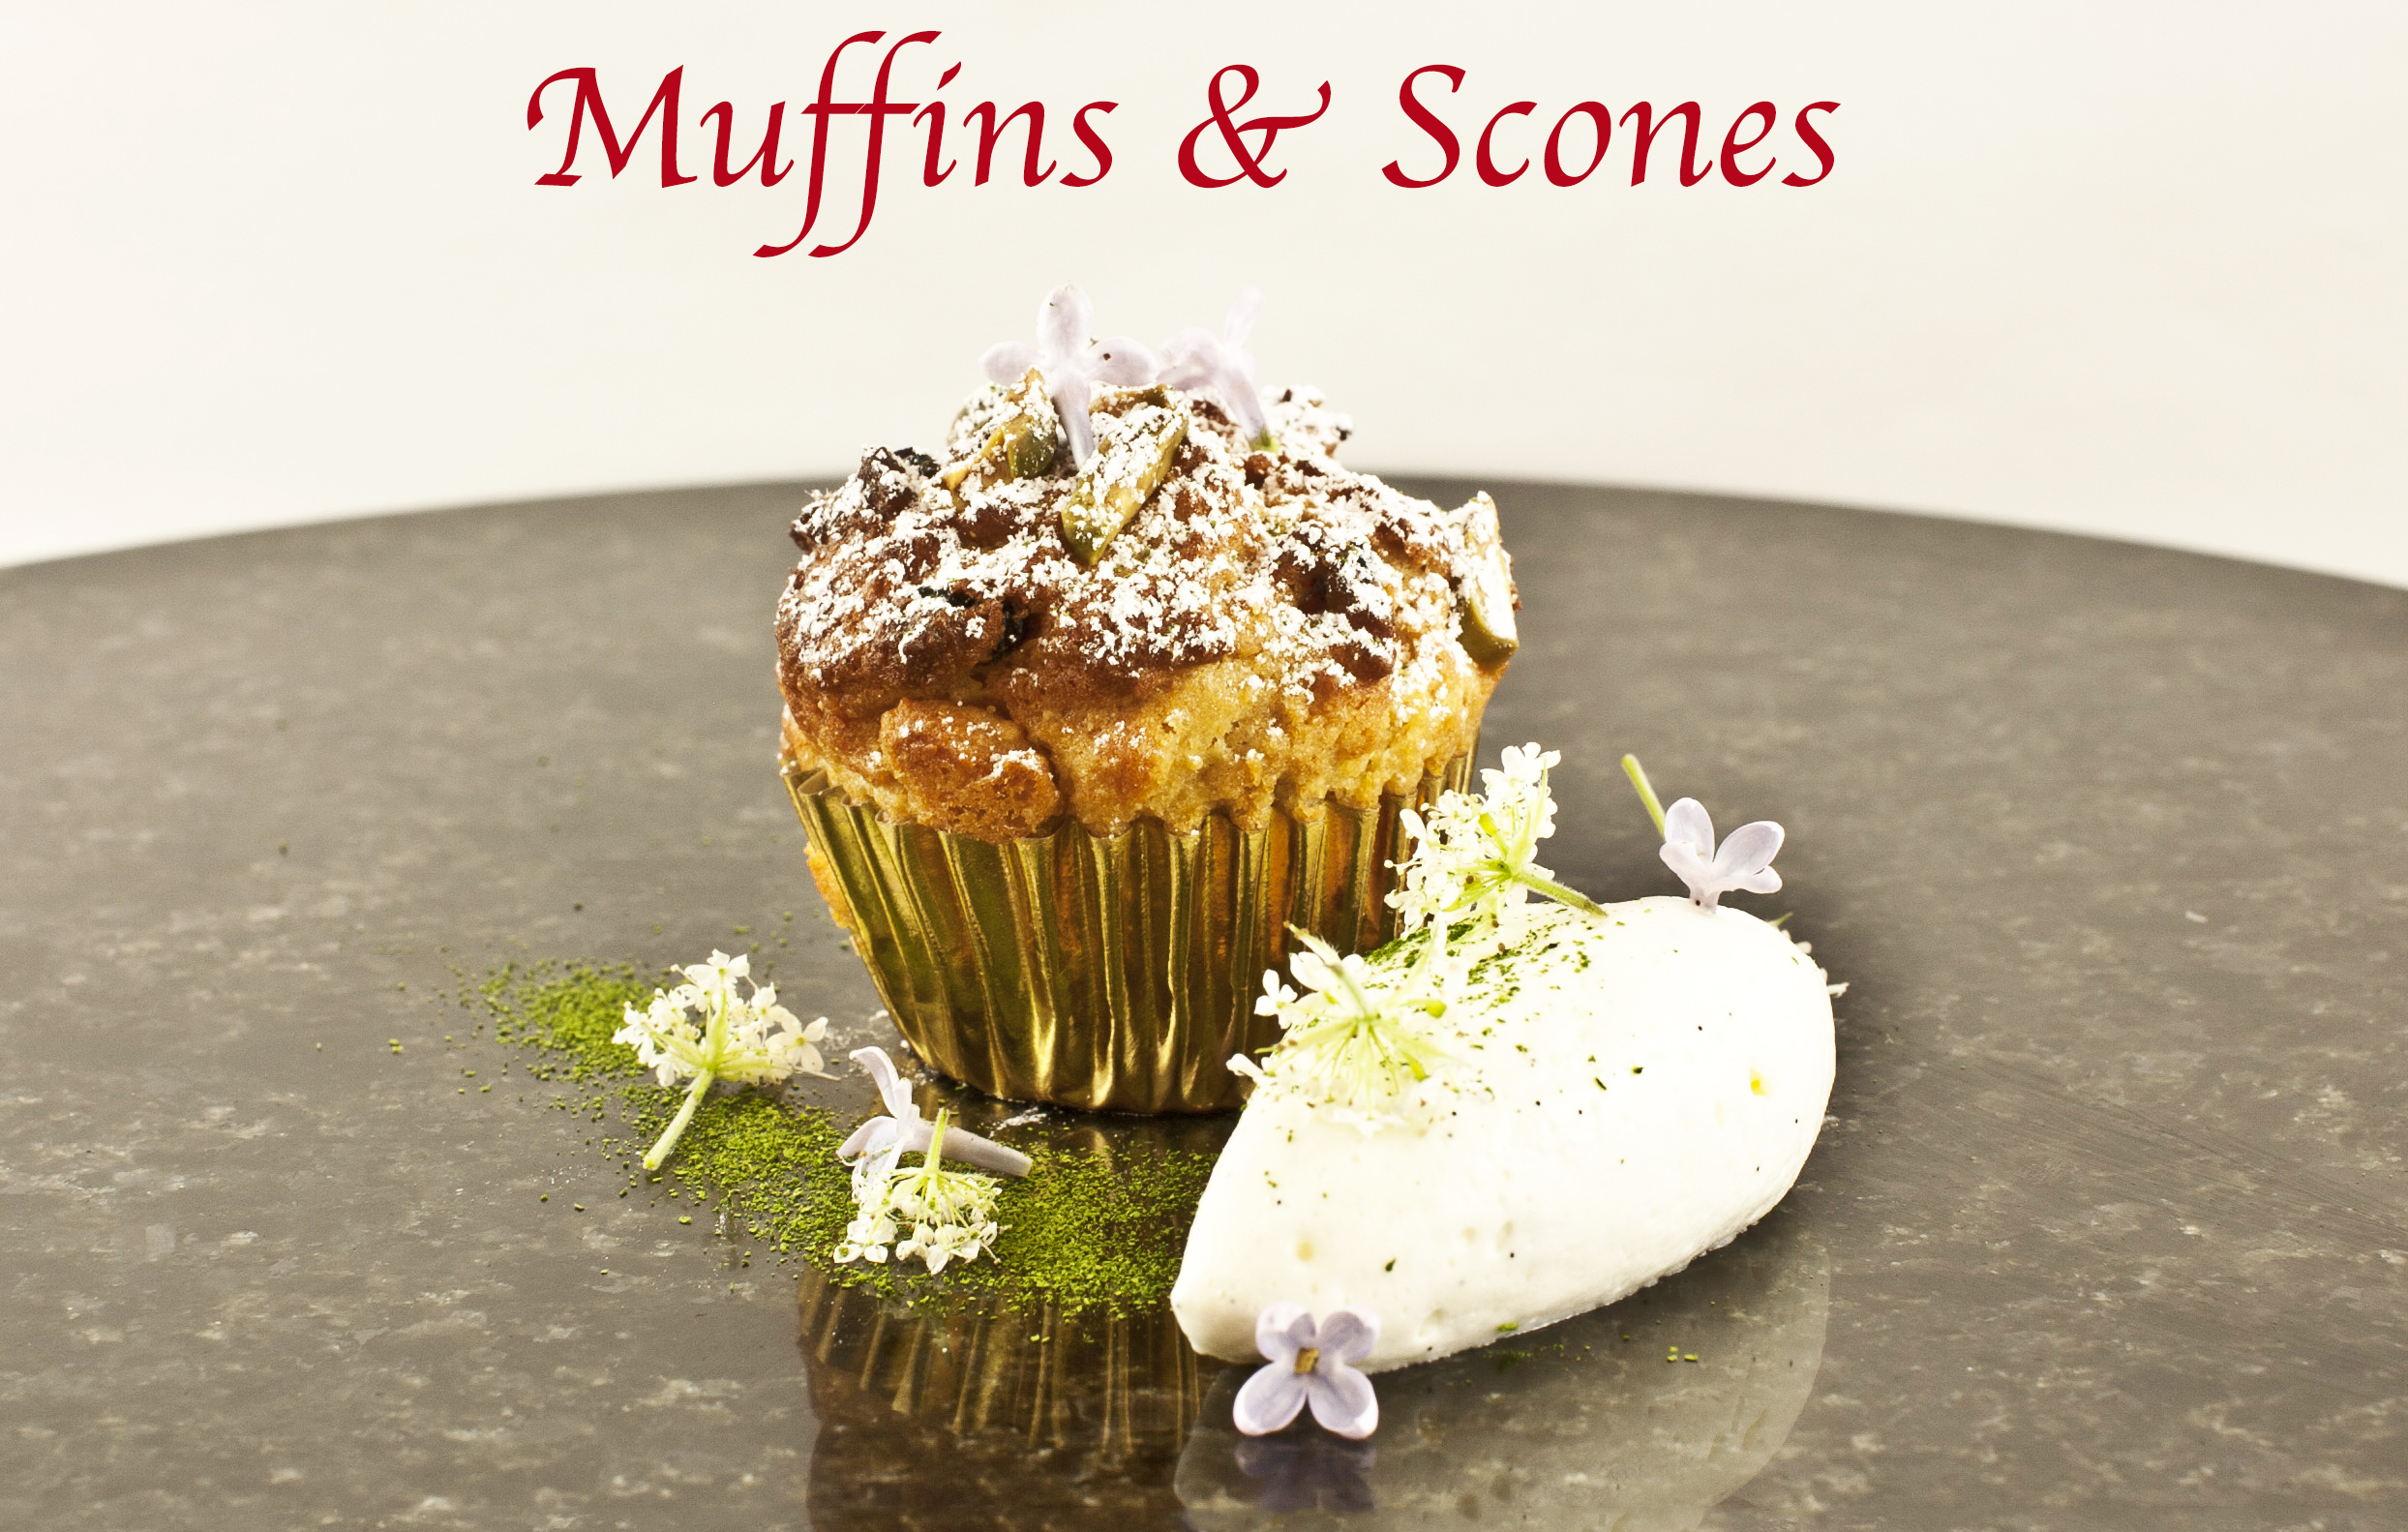 Muffins & Scones